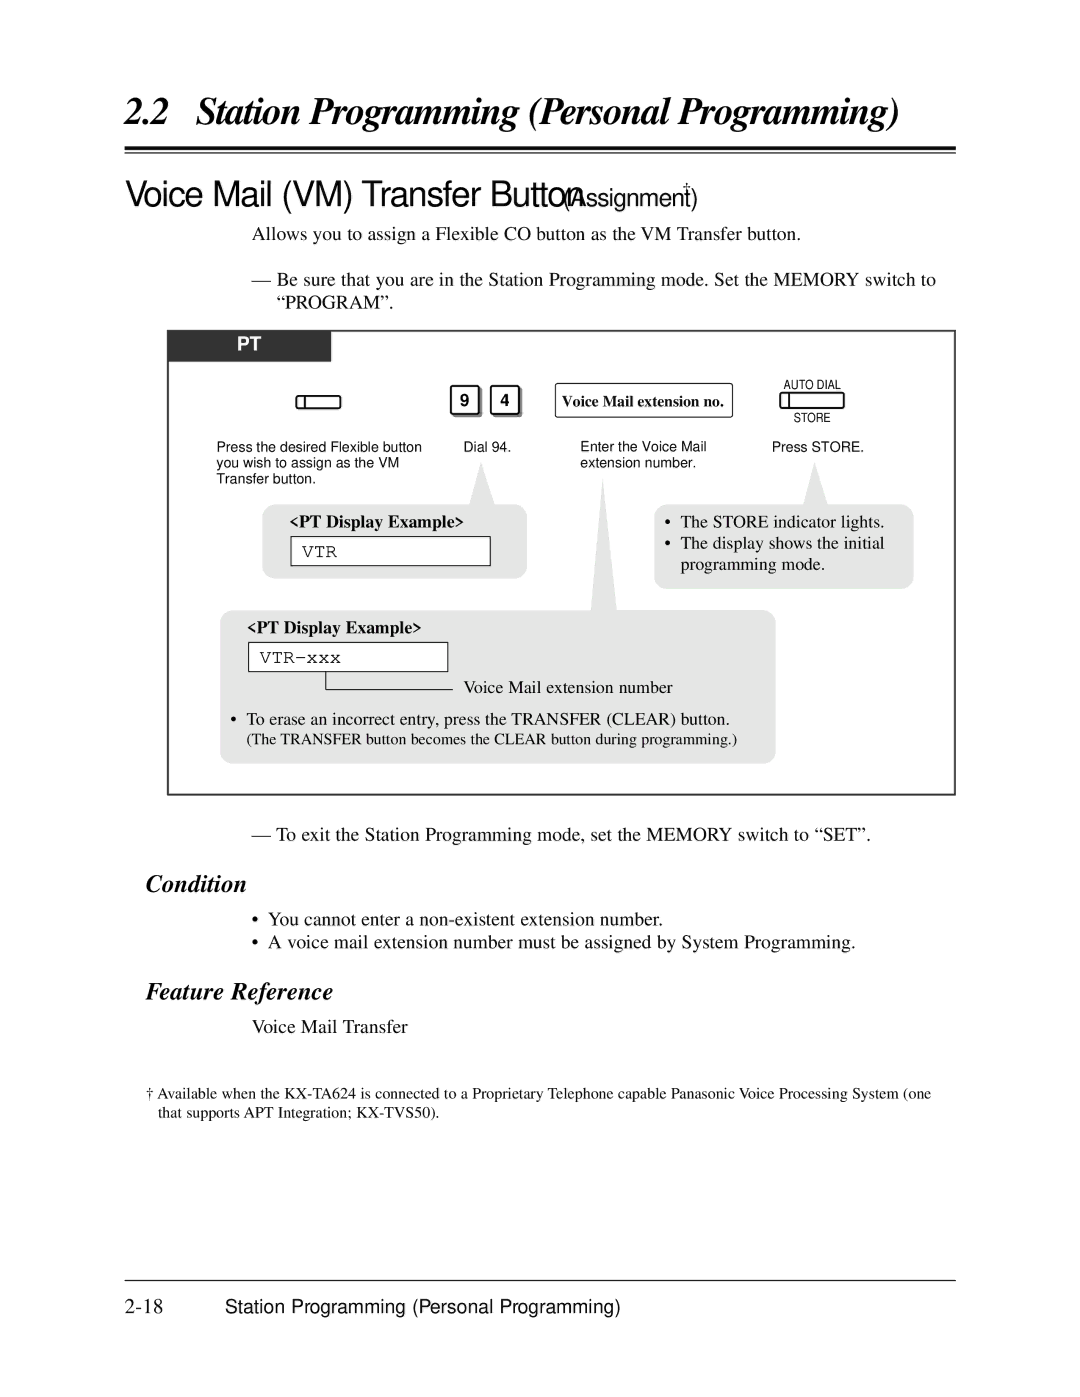 Panasonic KX-TA624 Voice Mail VM Transfer Button Assignment†, VTR-xxx, 18Station Programming Personal Programming 